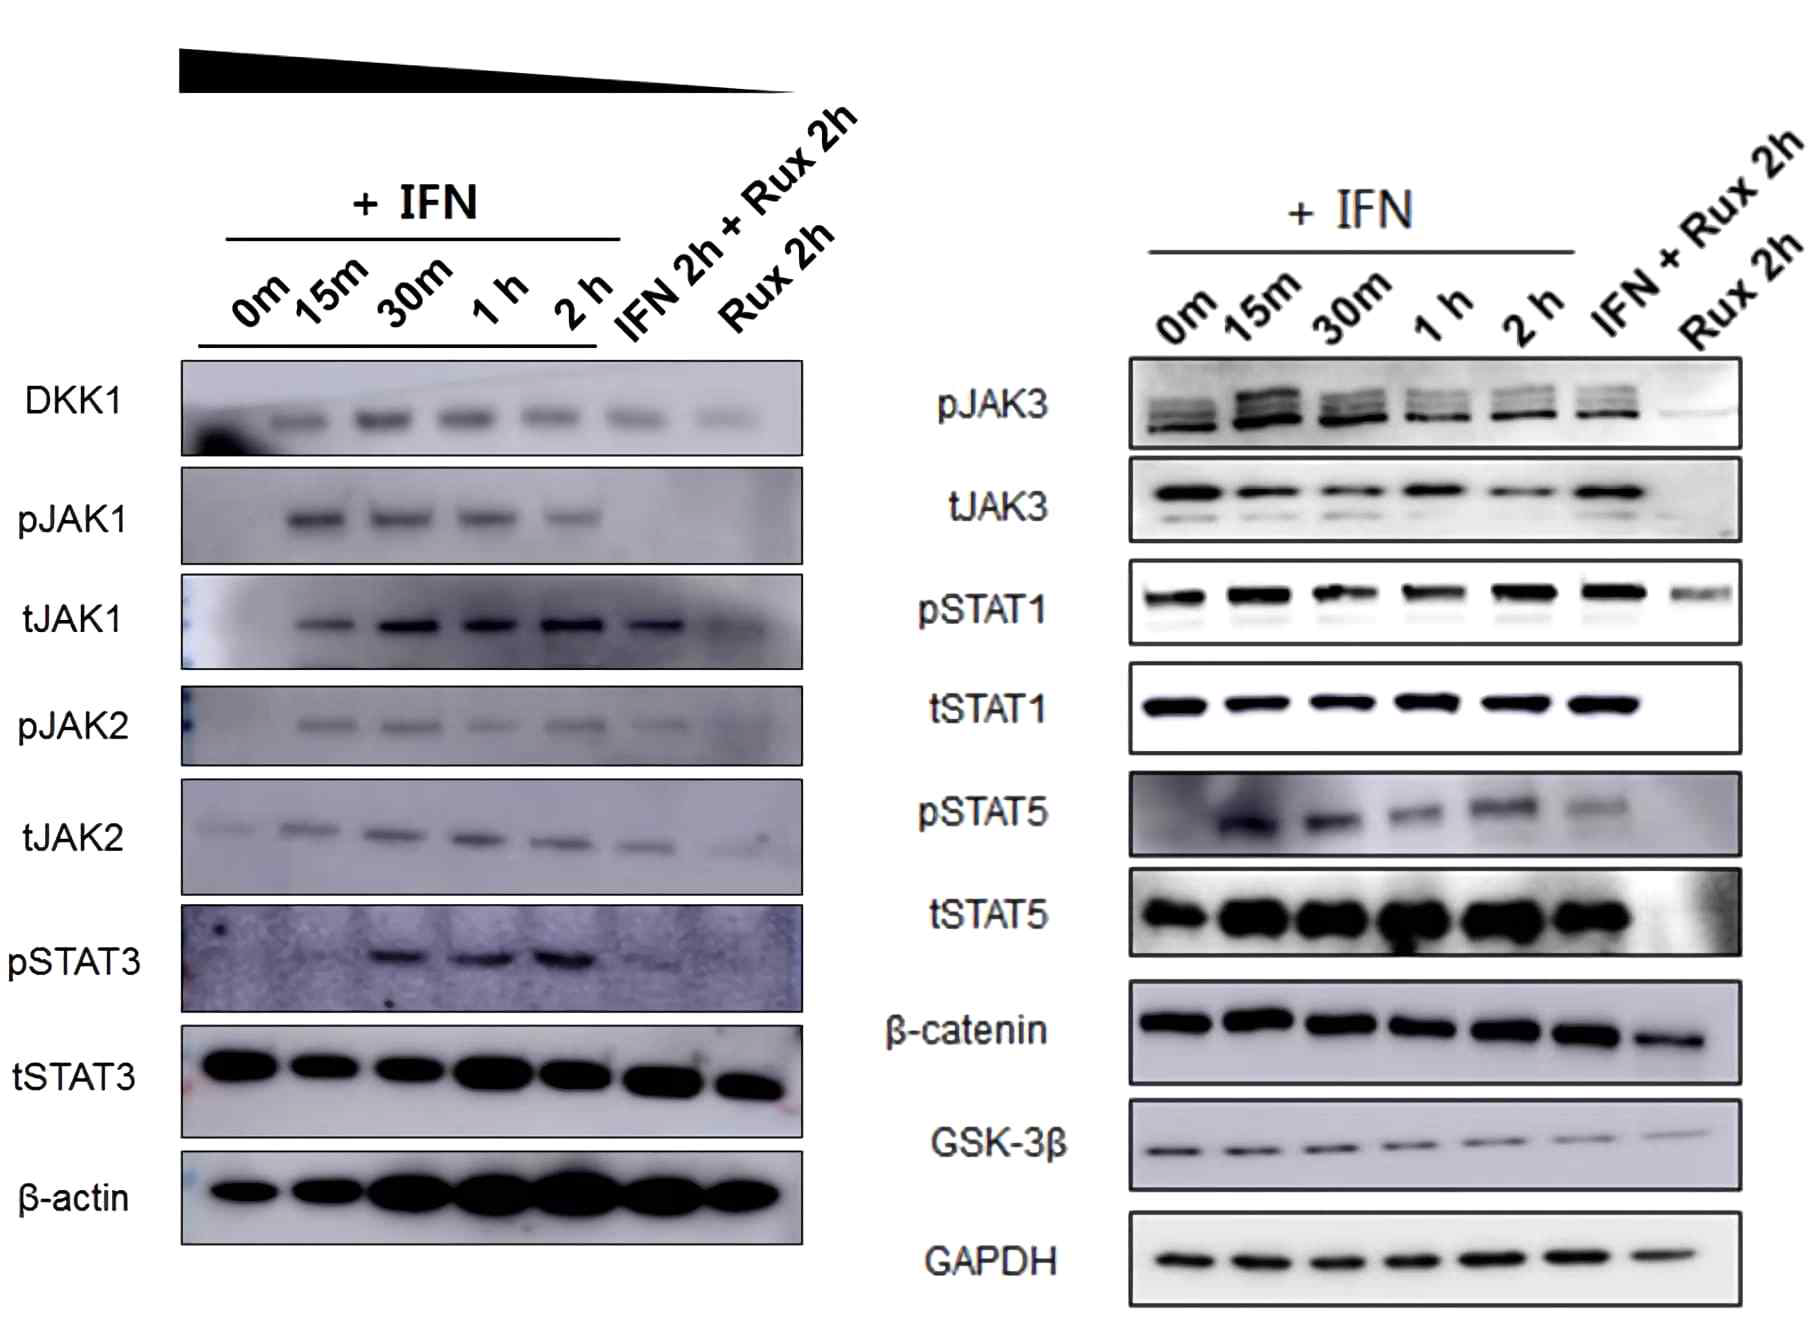 ruxolitinib을 IFN처리한 모유두세포 (원형탈모유사 세포환경)에 처리시 JAK/STAT경로가 효과적으로 차단되나, wnt/b-catenin경로와 관련한 단백수준의 변화는 관찰되지 않음: hMSCs 처리시 IFN처리군 대비 STAT의 급격한 증가와 GSK-3b등의 단백 발현 수준까지 증가→줄기세포치료의 직접적 모낭주기 자극 가능성 제시